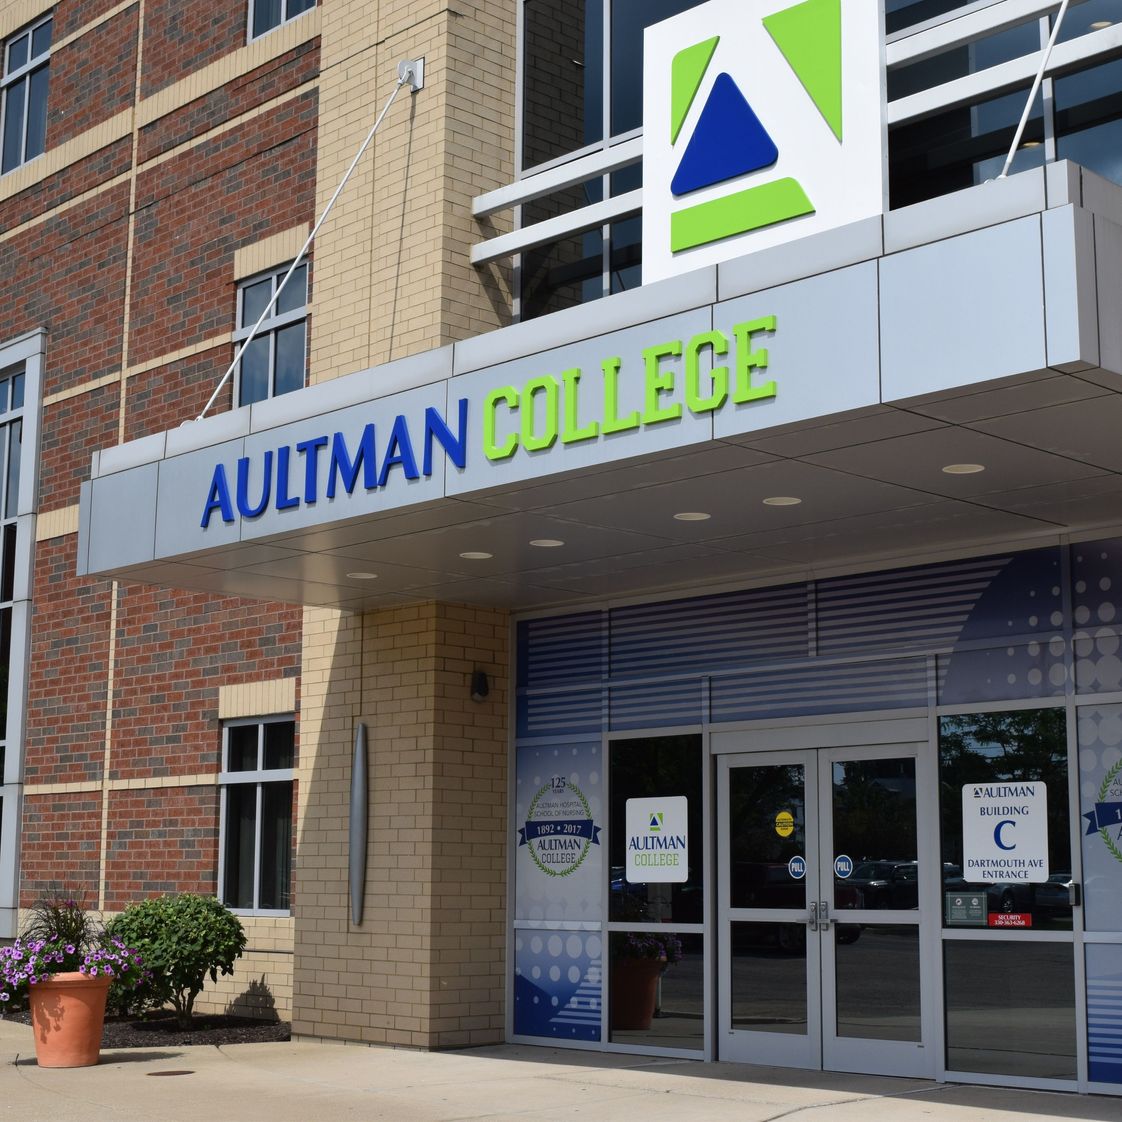 Aultman College of Nursing and Health Sciences Photo #1 - Aultman College